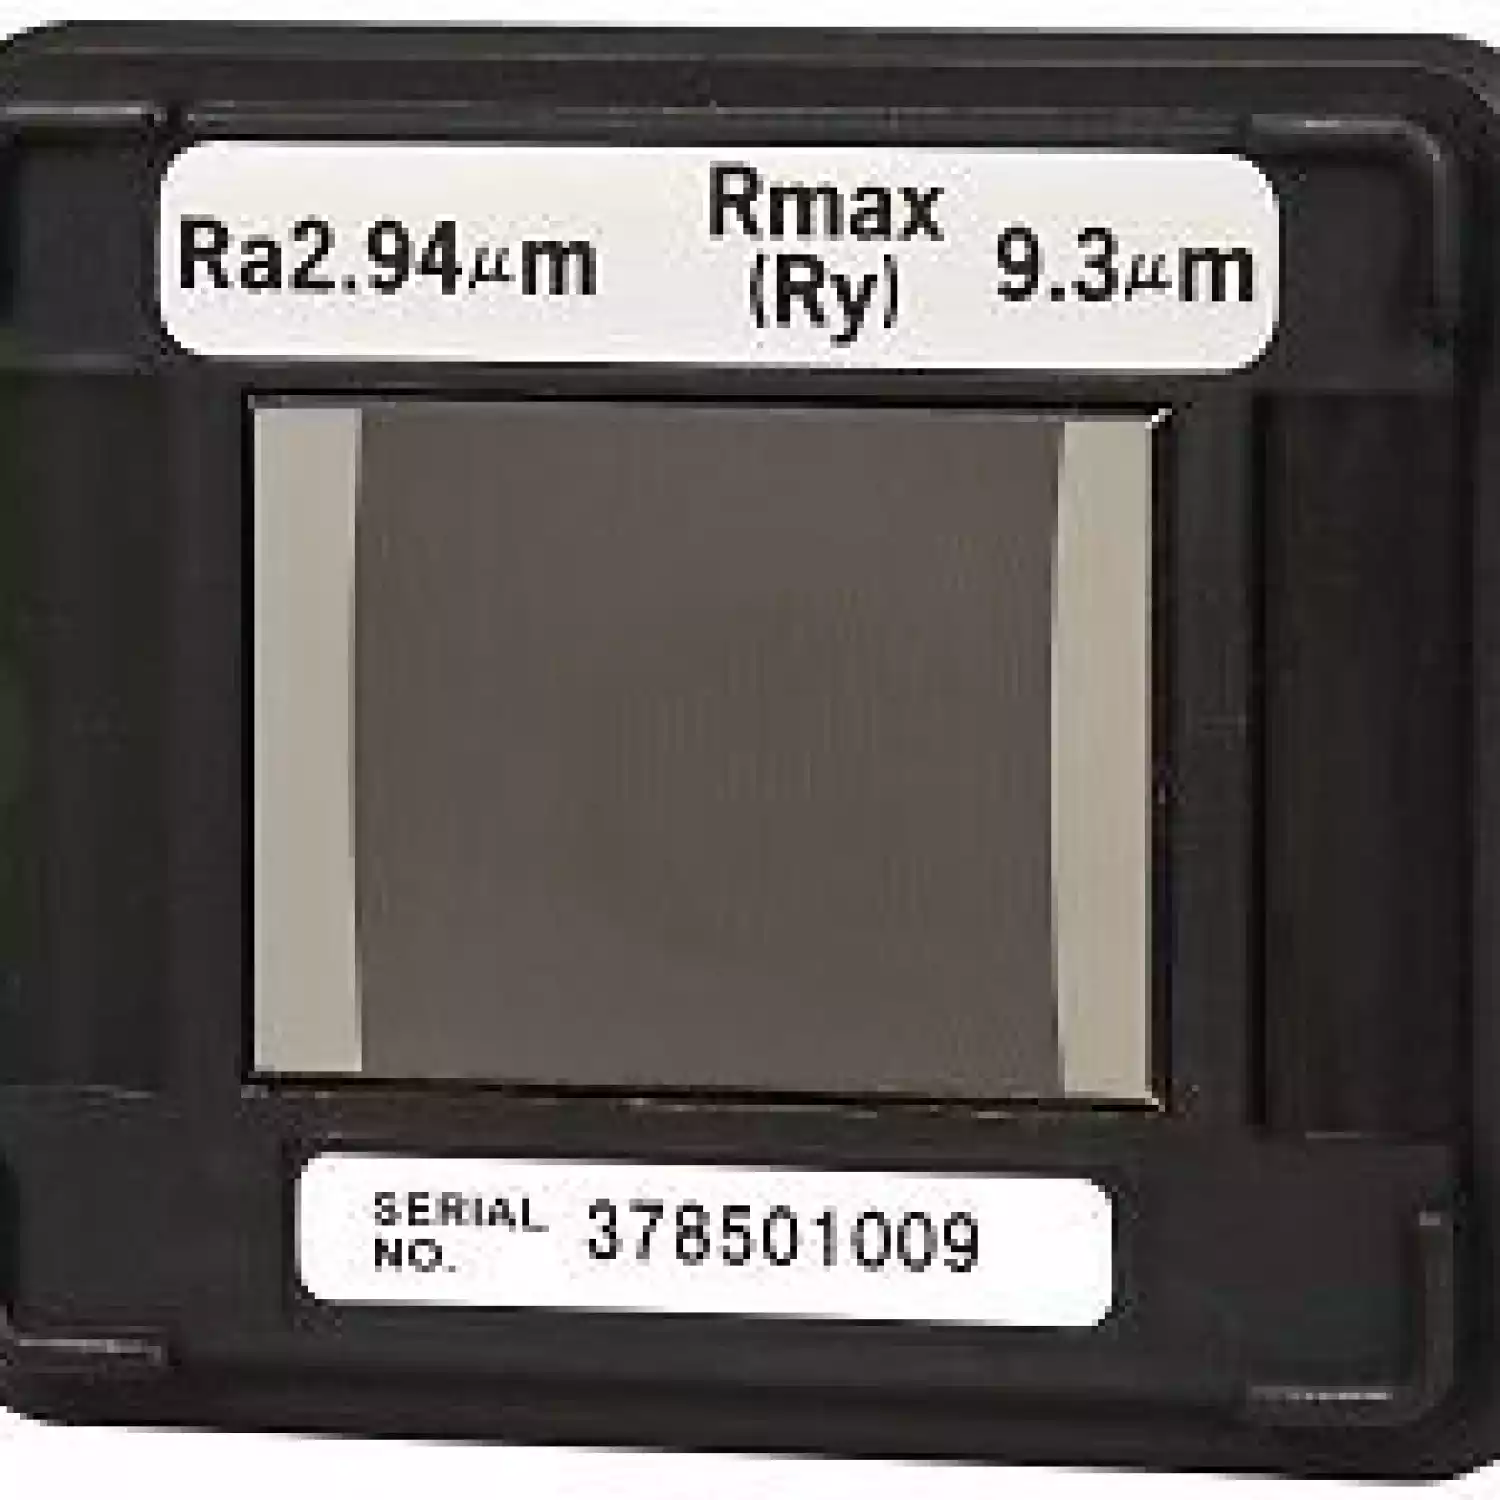 Mitutoyo 178-602 мера шероховатости, параметры Ra 2,94 мкм; R max (Ry) 9,3 мкм - 1